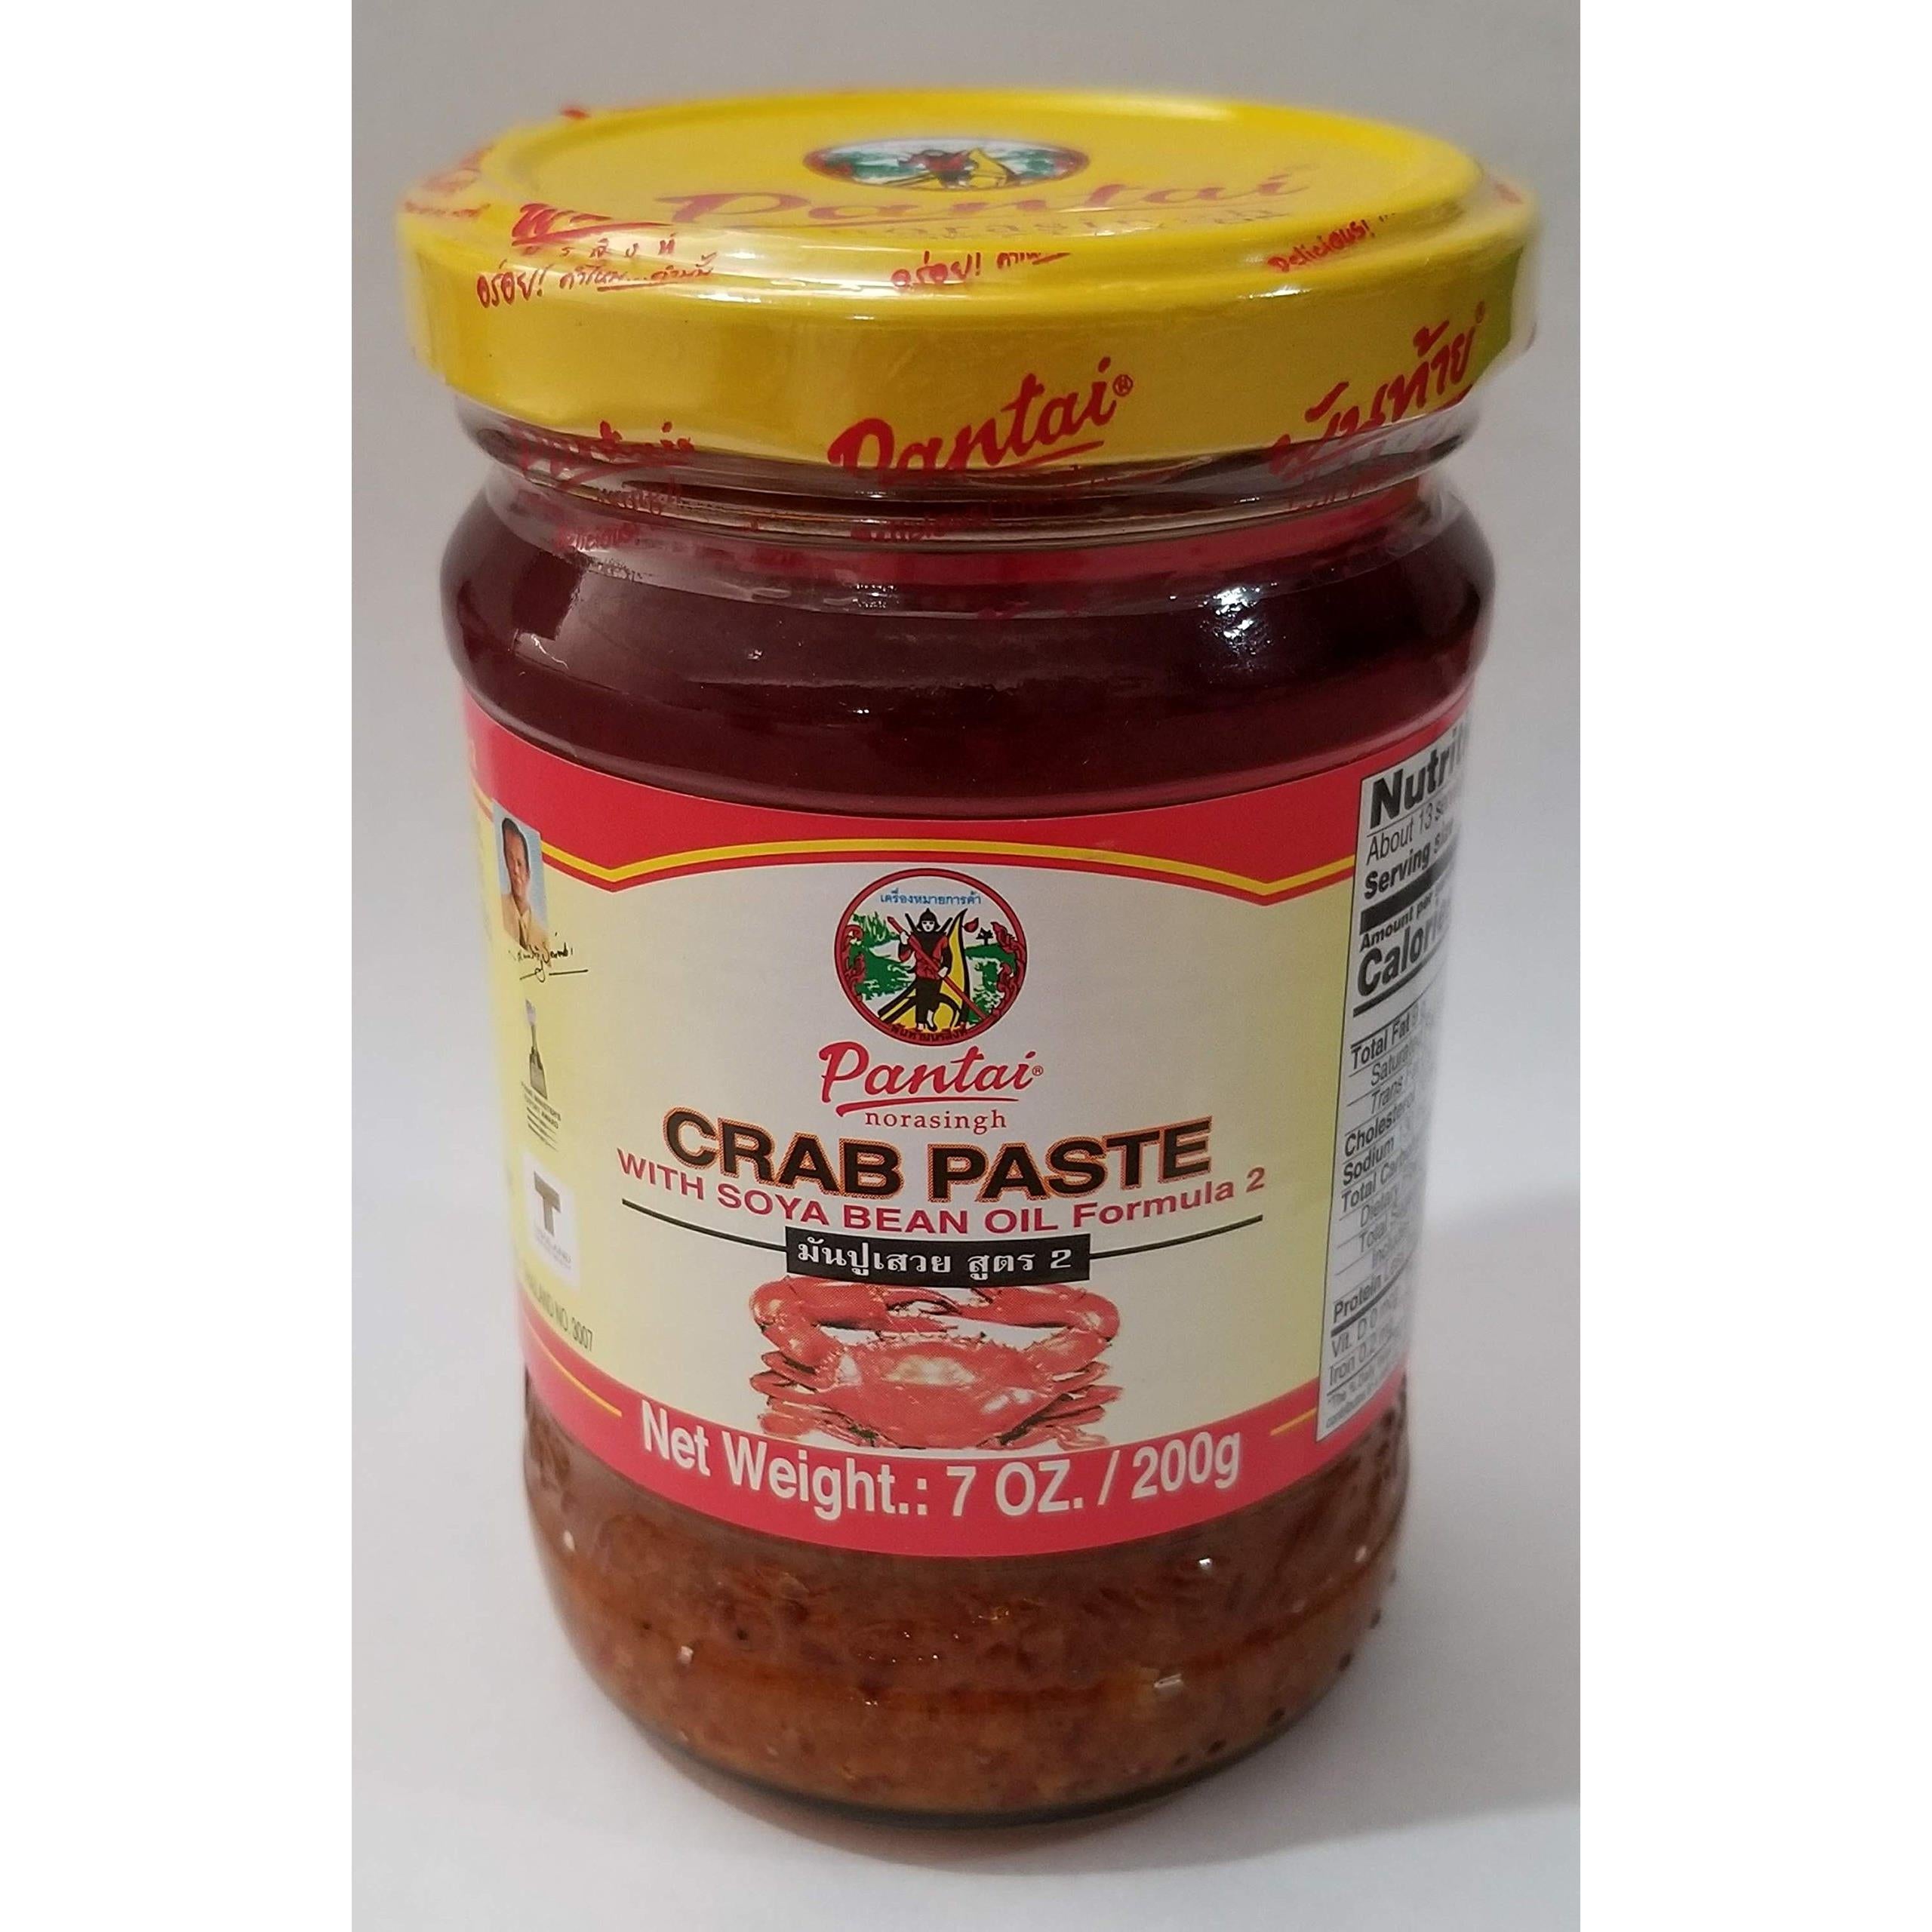 Crab Paste with Soya Bean Oil Formula 2 (7oz x 2 jars)